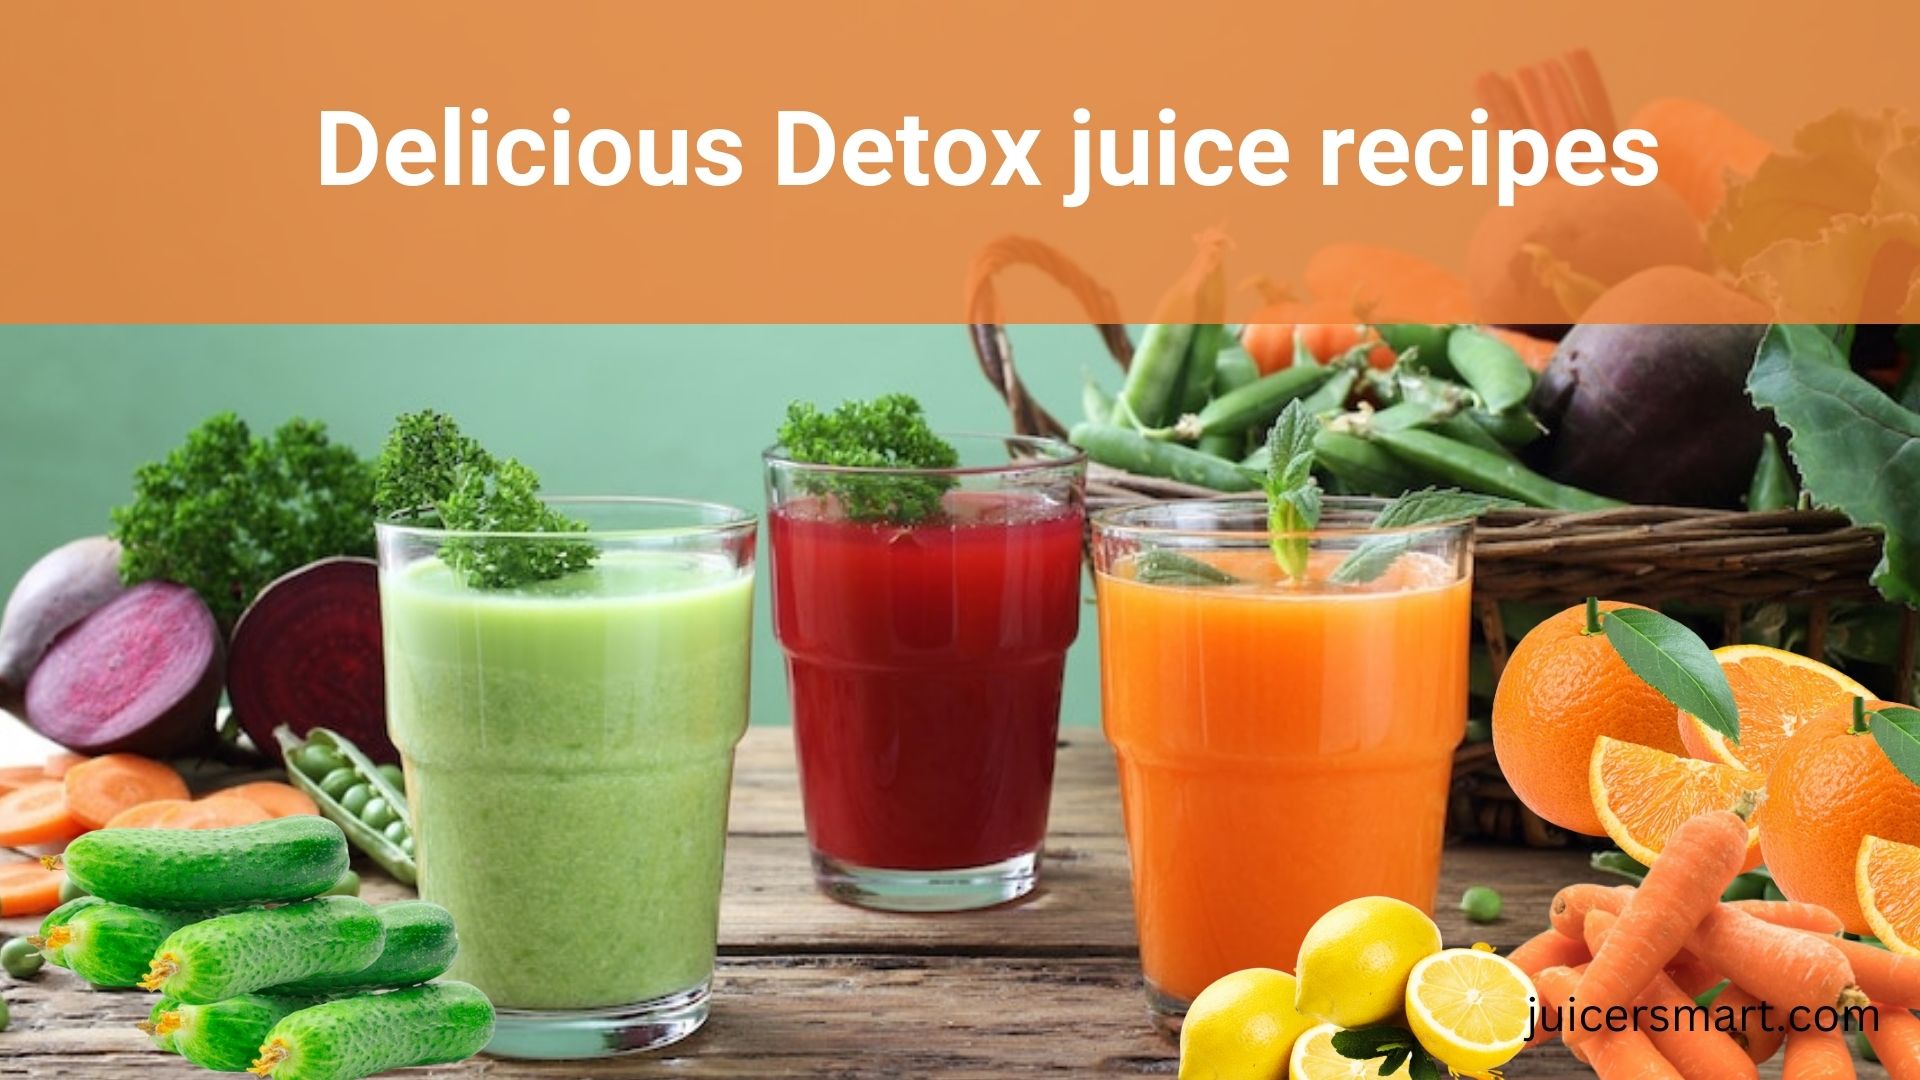 Delicious Detox juice recipes